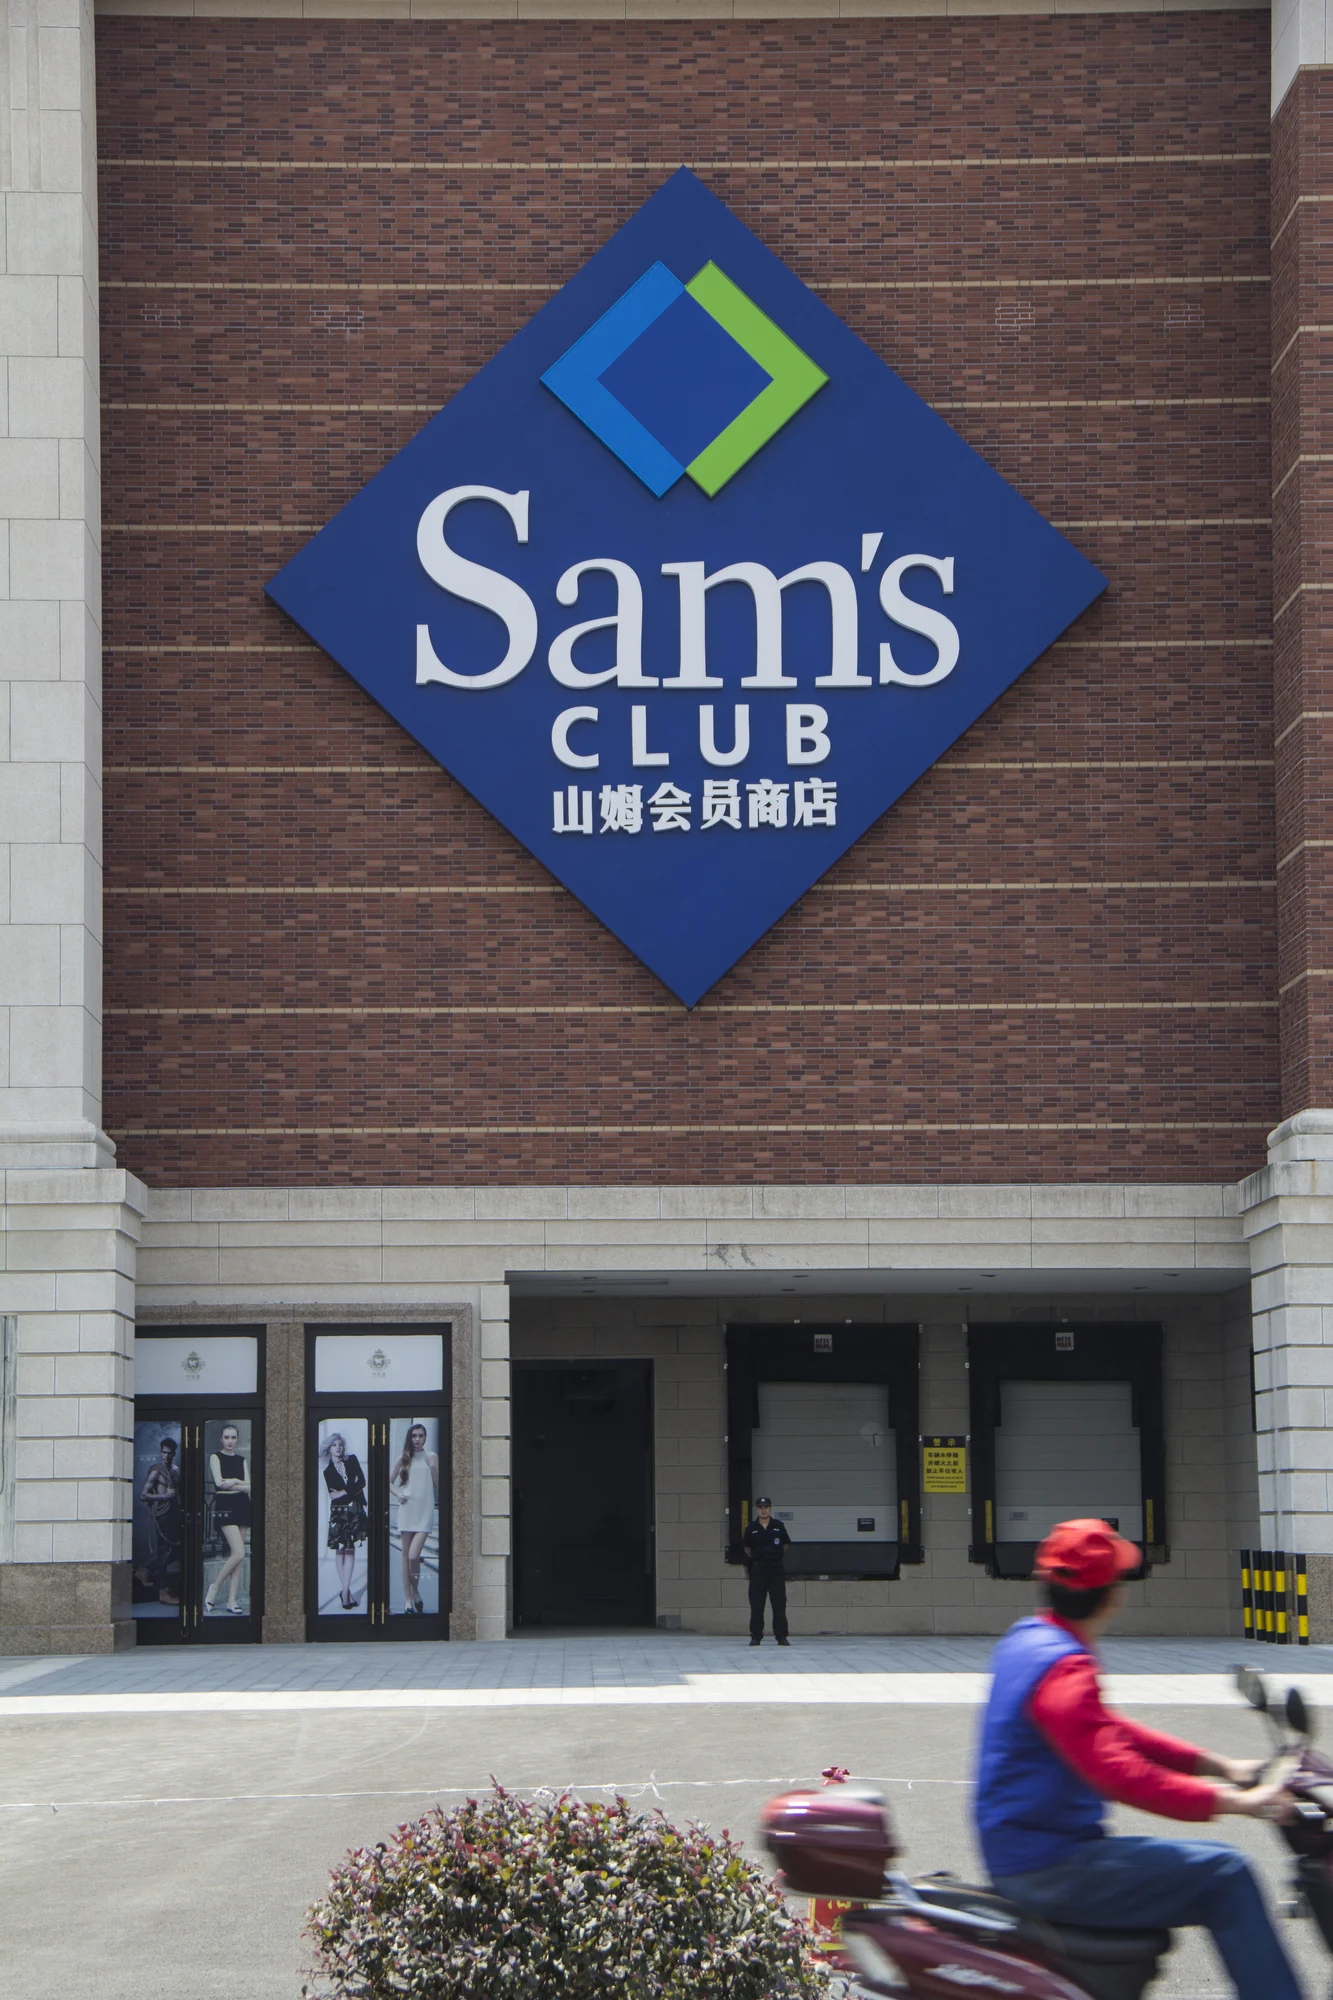 Get a 1-Year Sam's Club Membership for $10